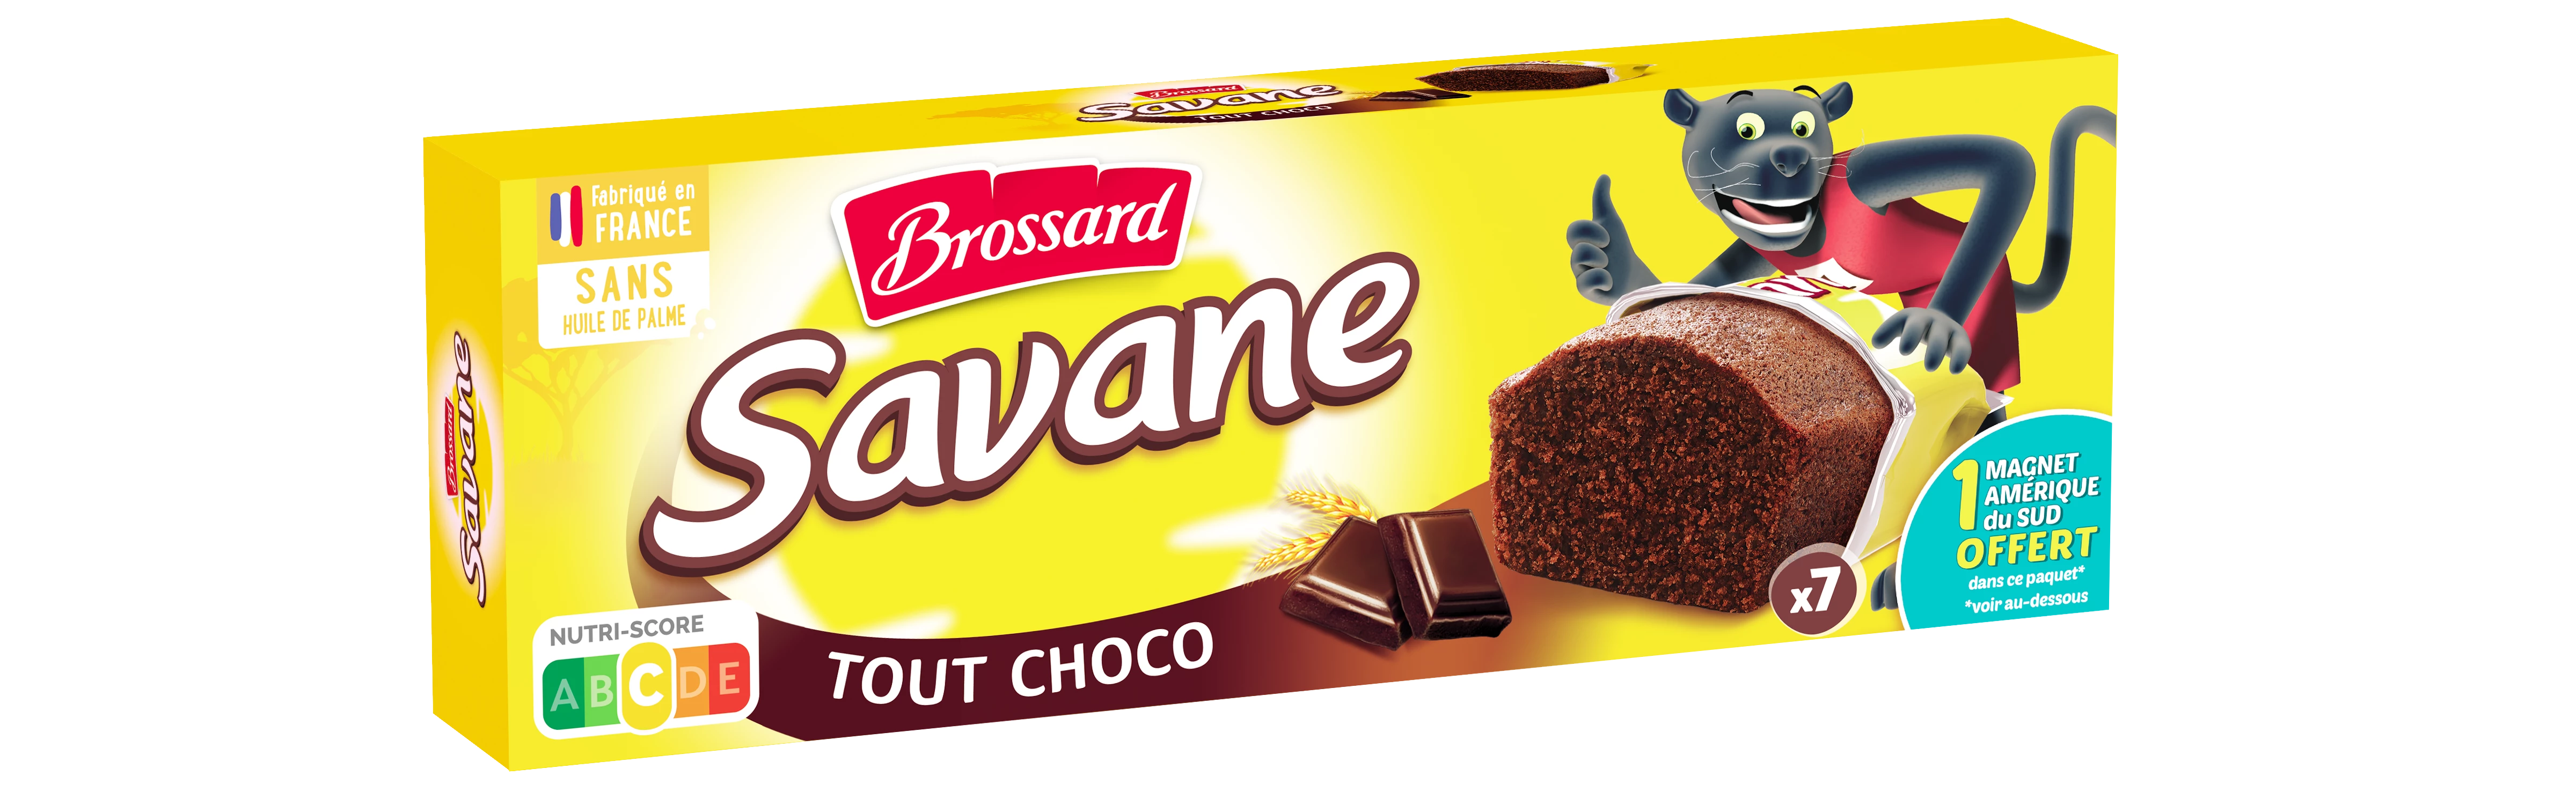 Savane Pocket 全巧克力 X7 210g